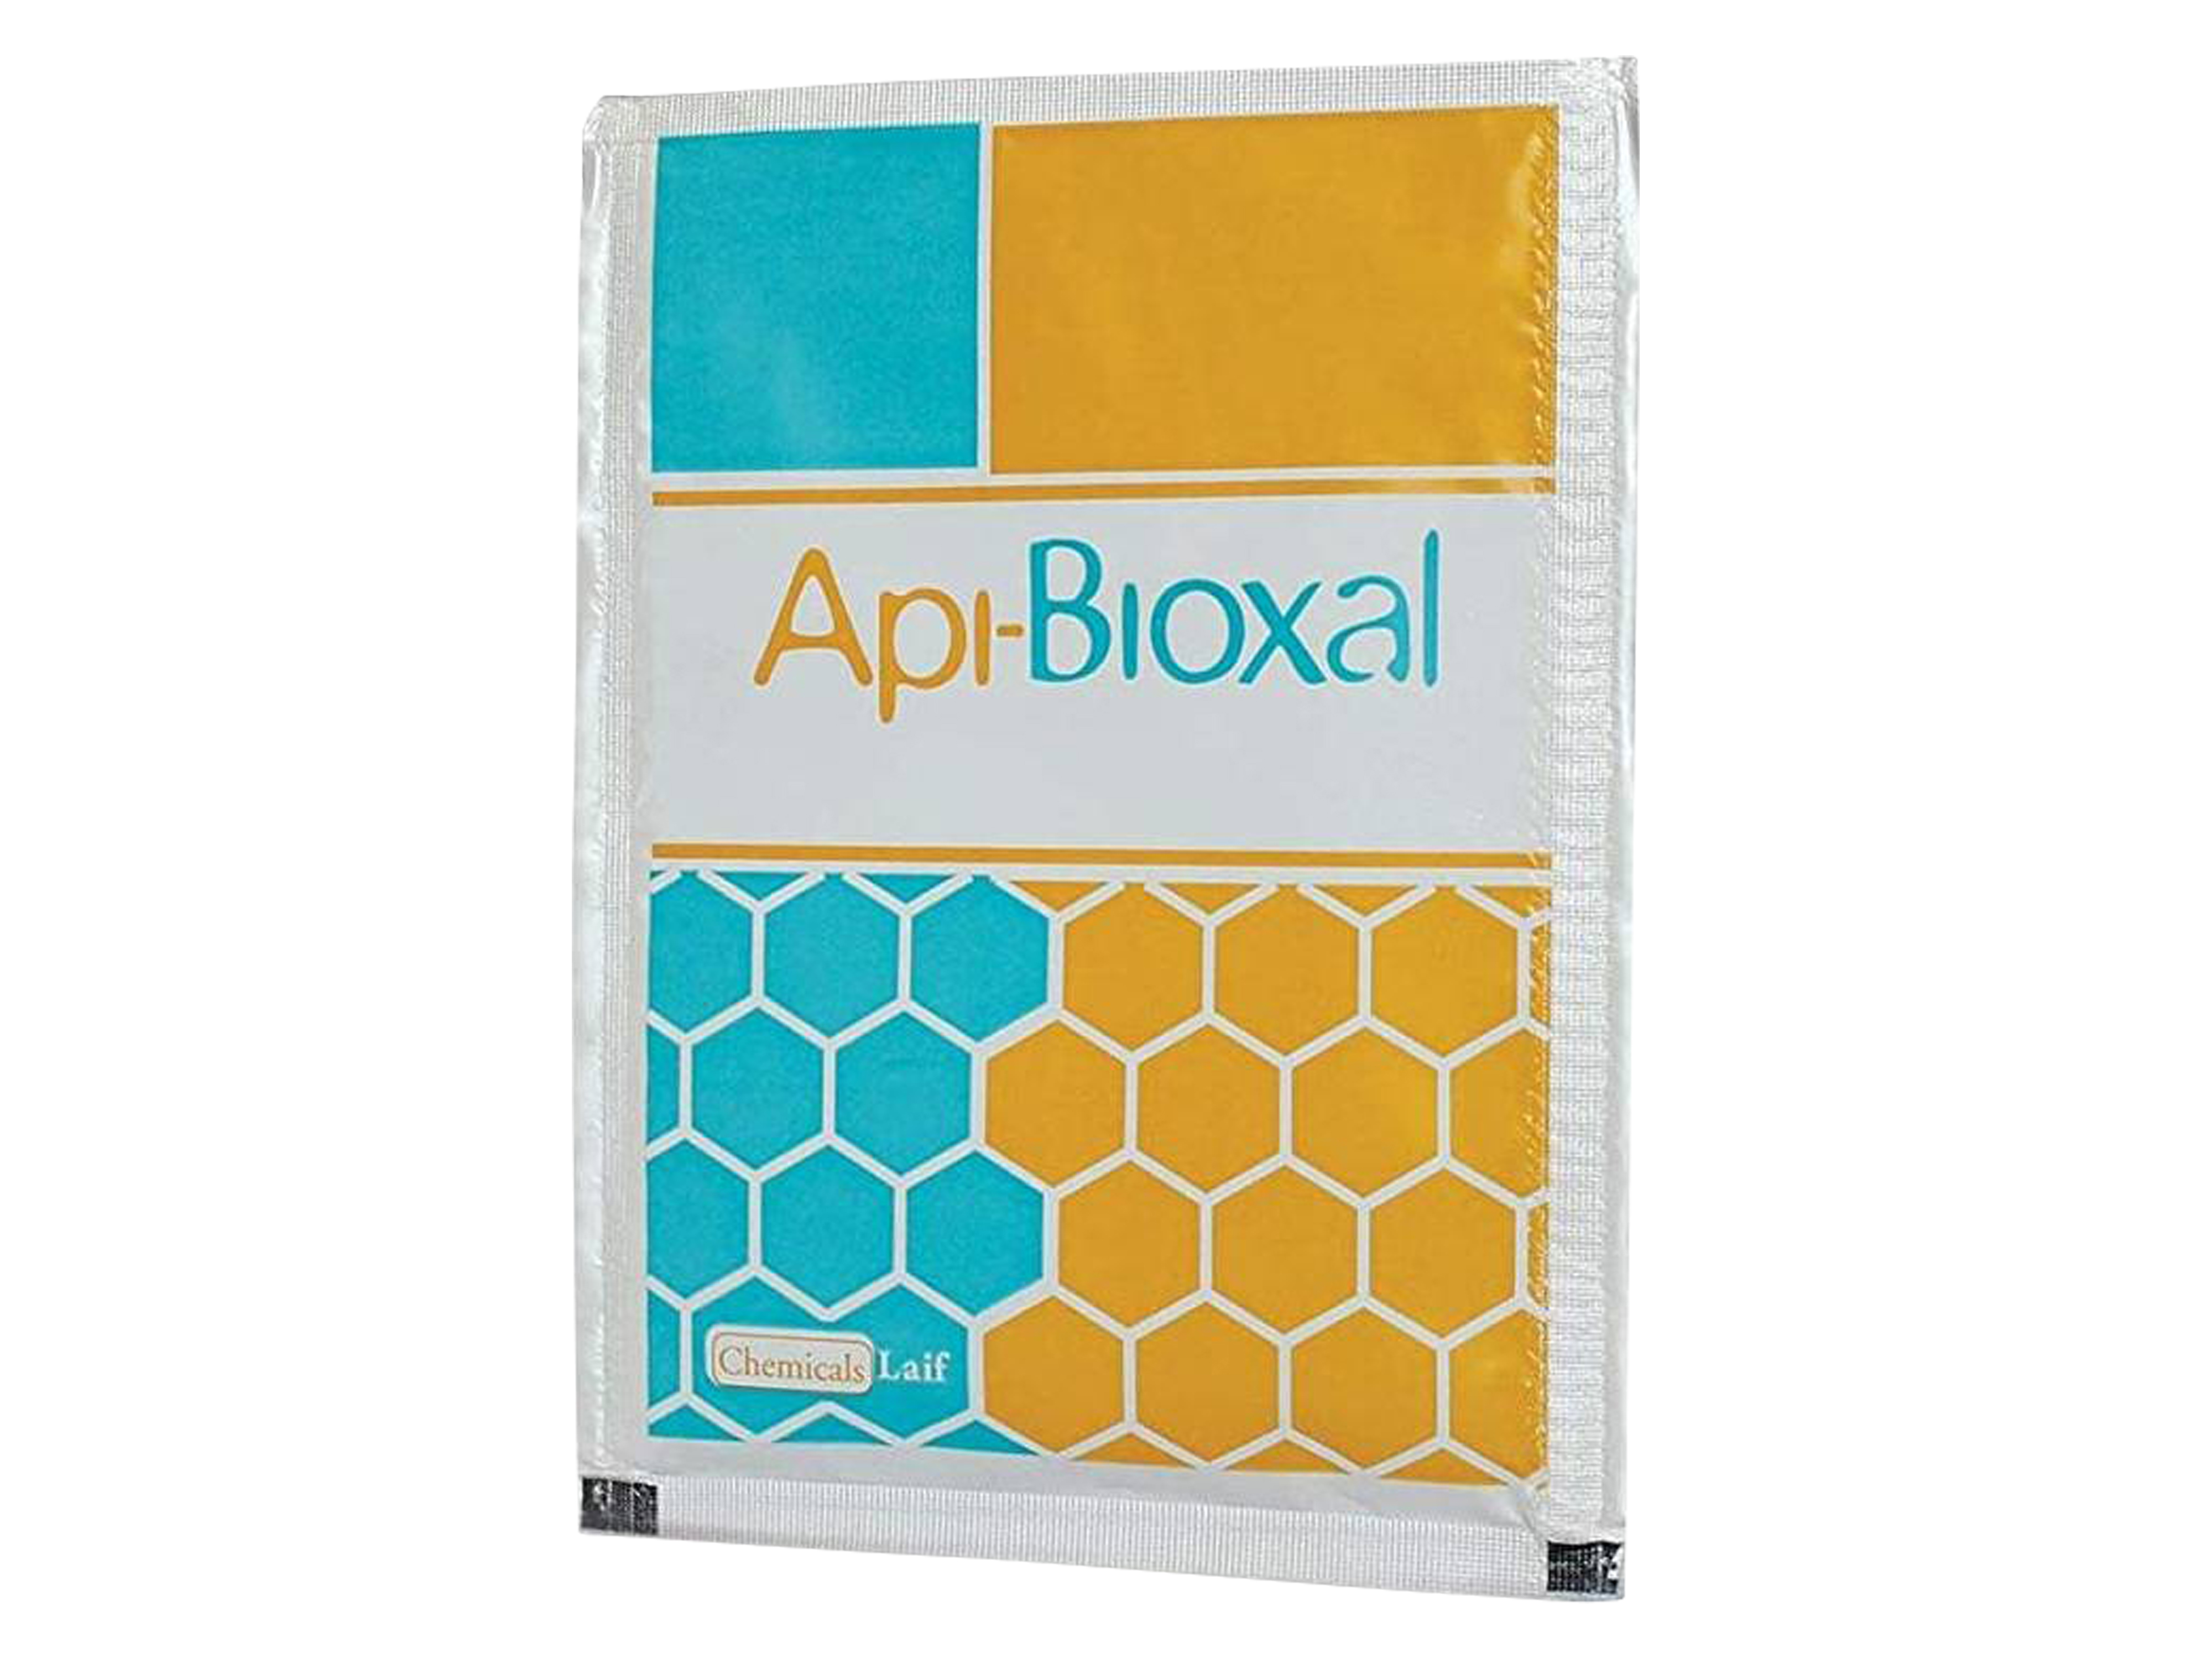 Api-Bioxal 886 mg/g pulver til bikubeoppløsning, 35 g.